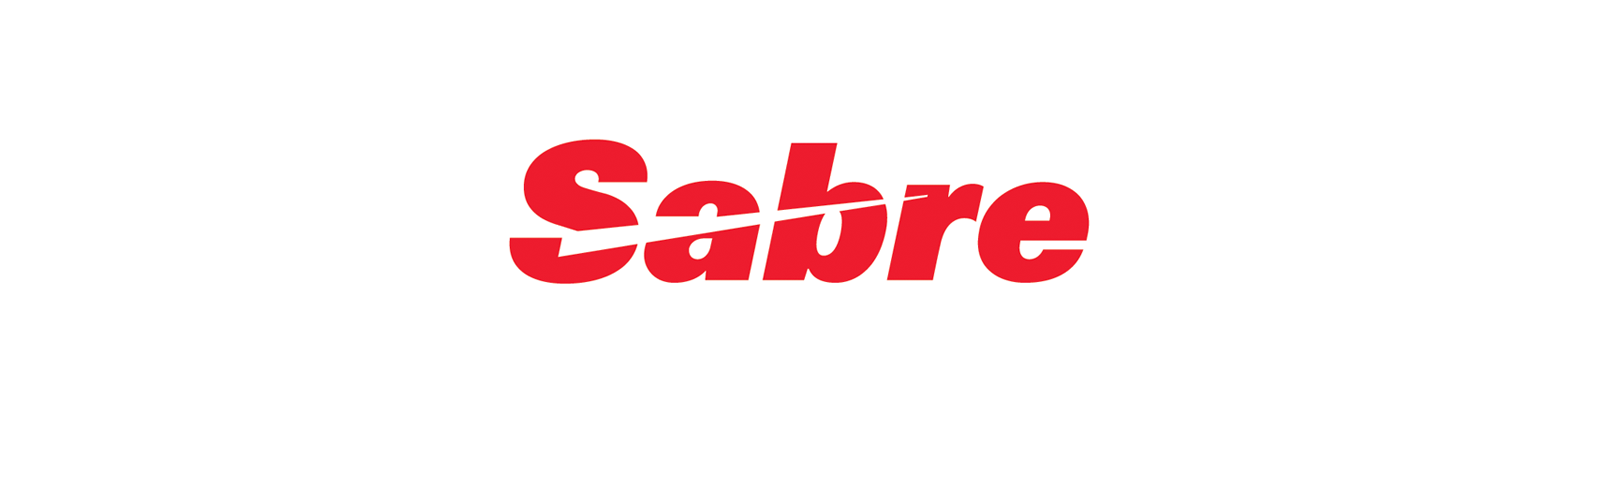 Sabre_Webinar_ABC-Site_Header_Placeholder_1600x489